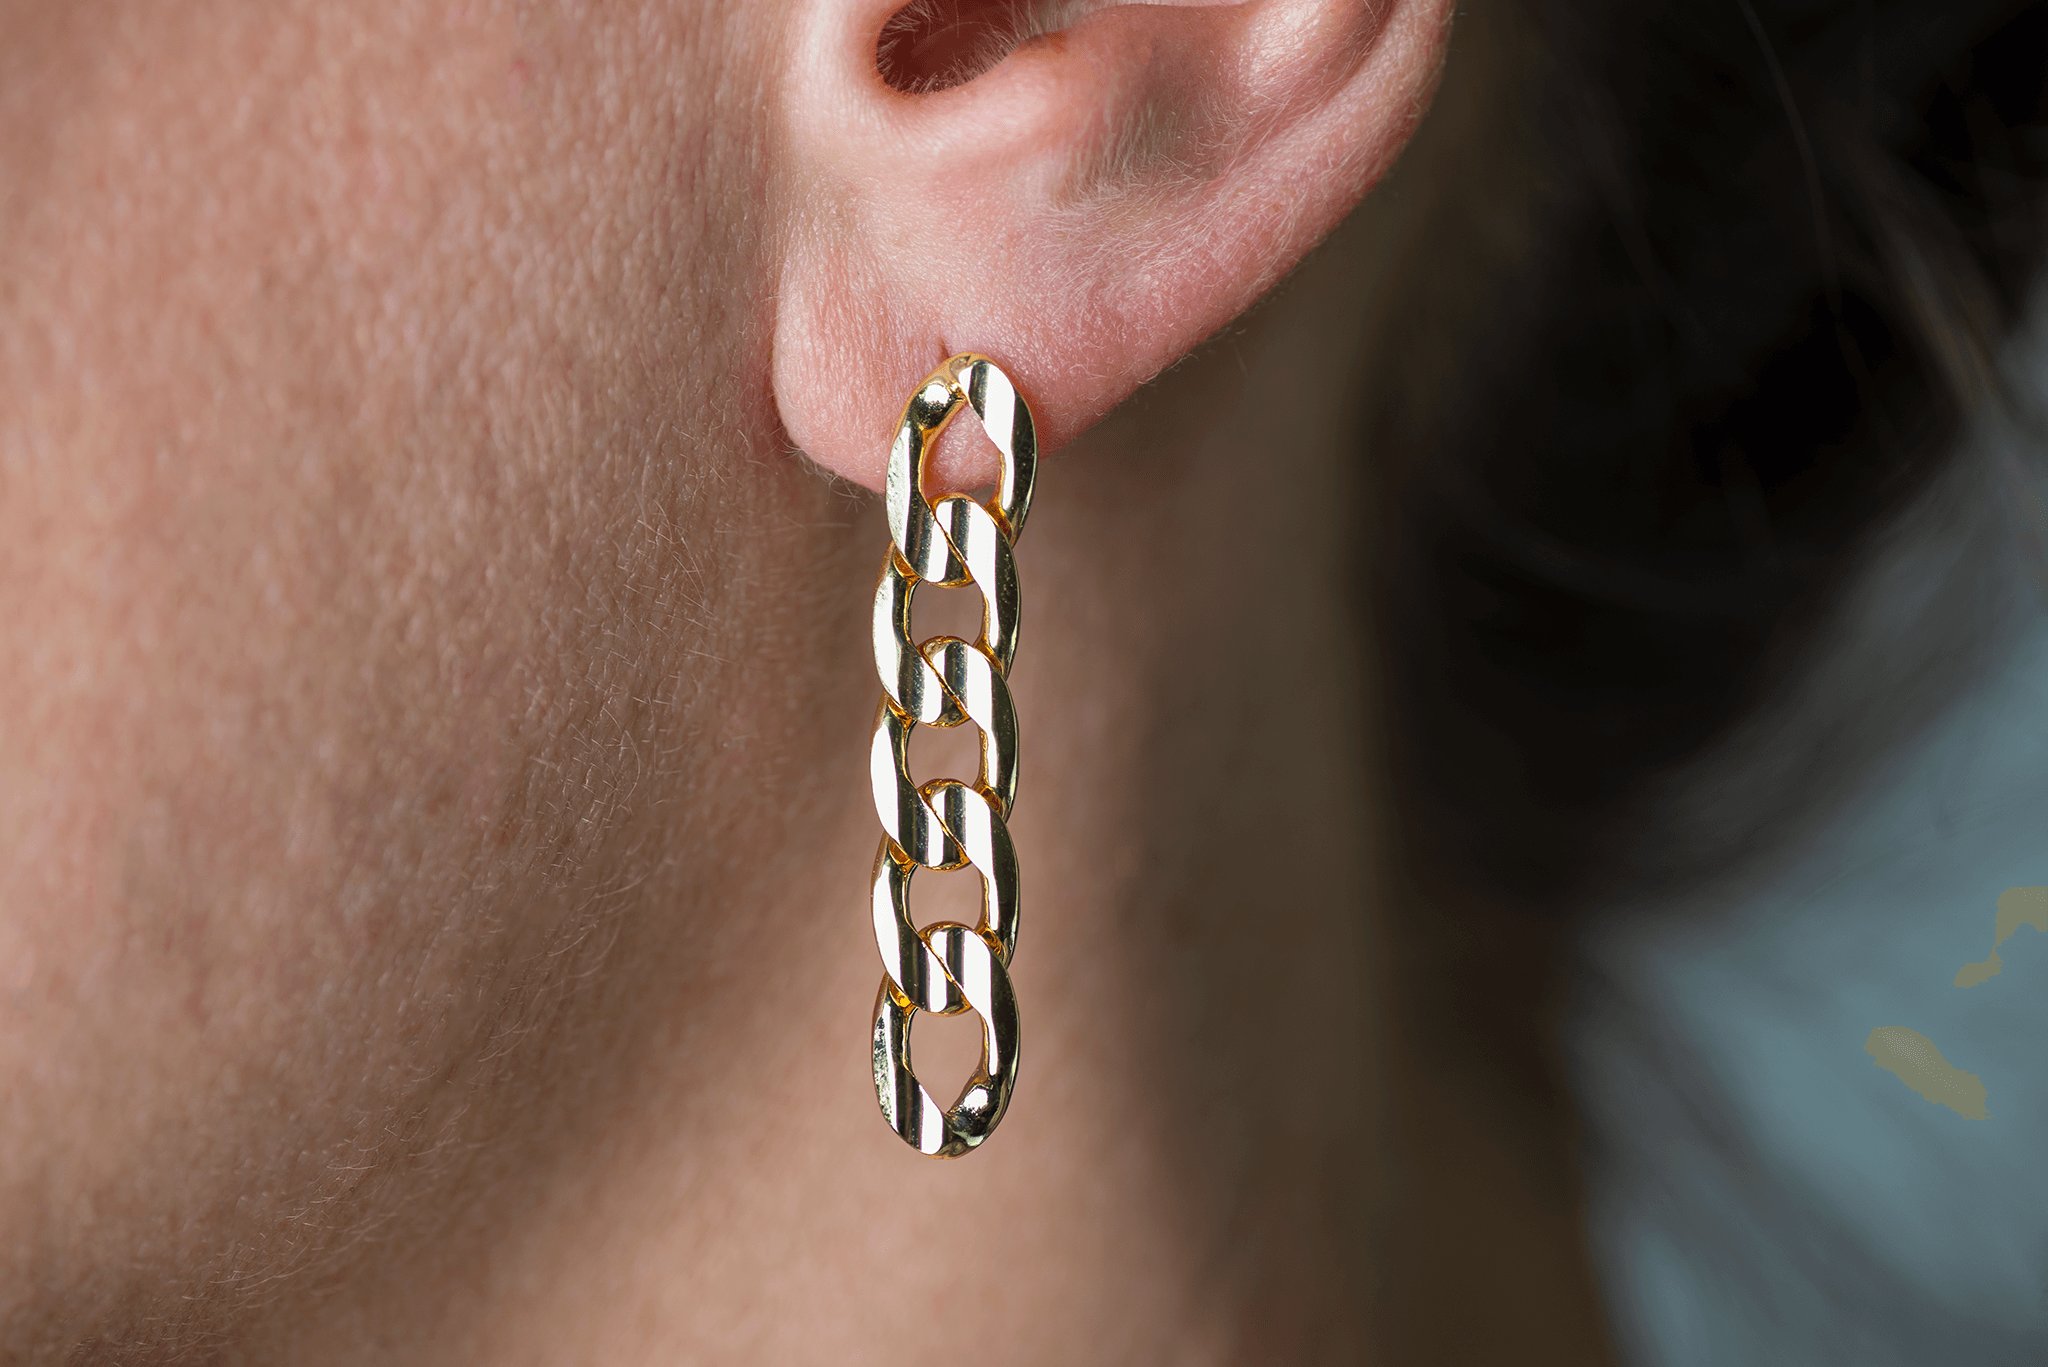 Gold Curb Chain Hoop Earrings